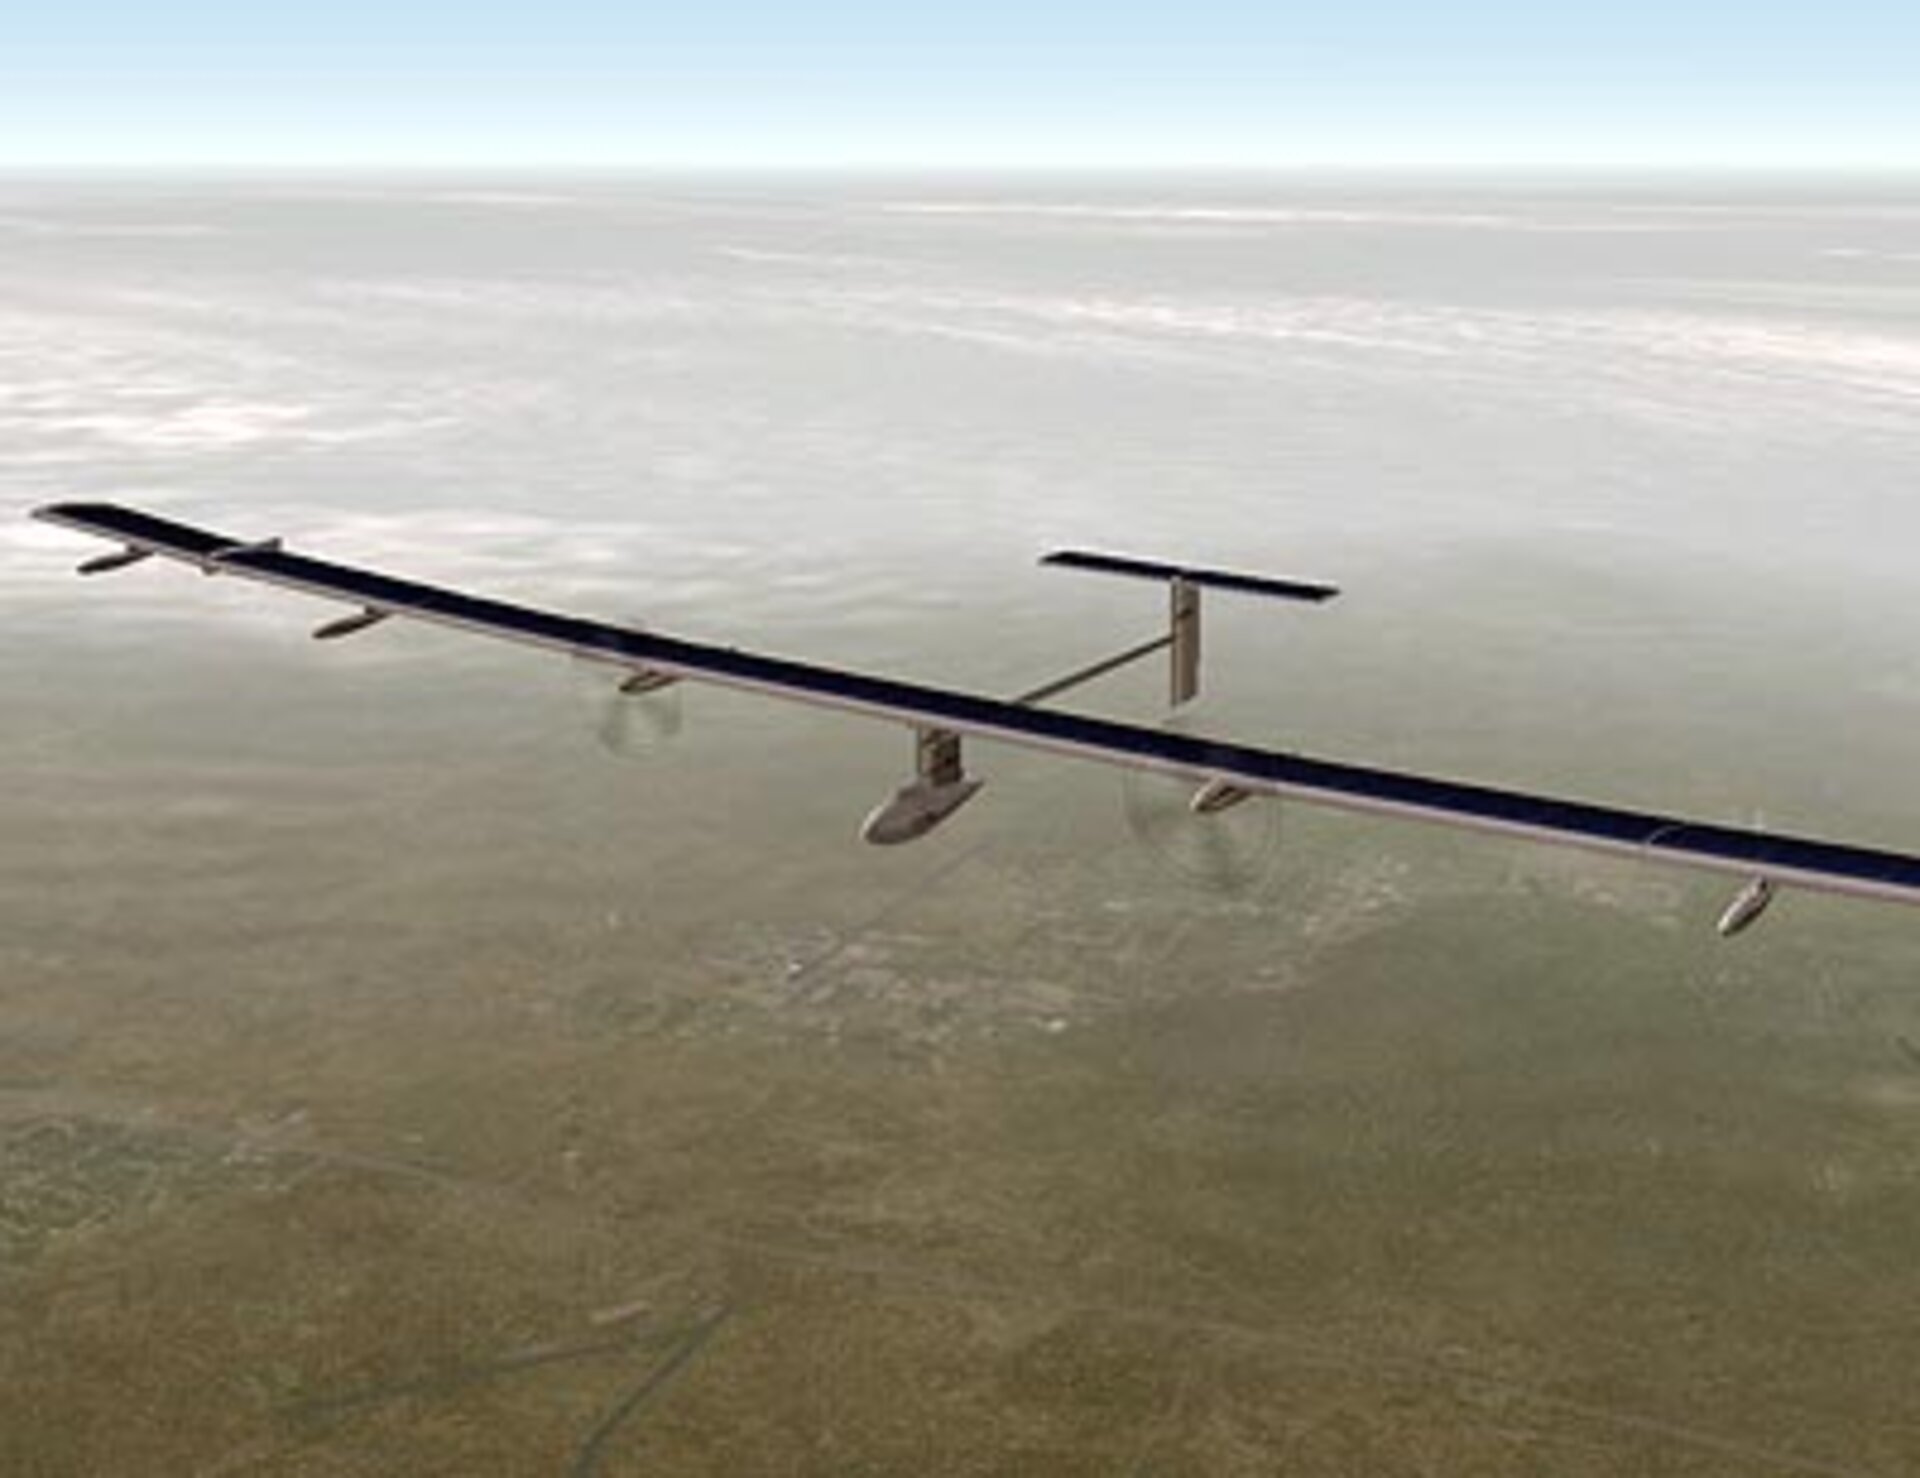 Solar plane to fly around the world 2010